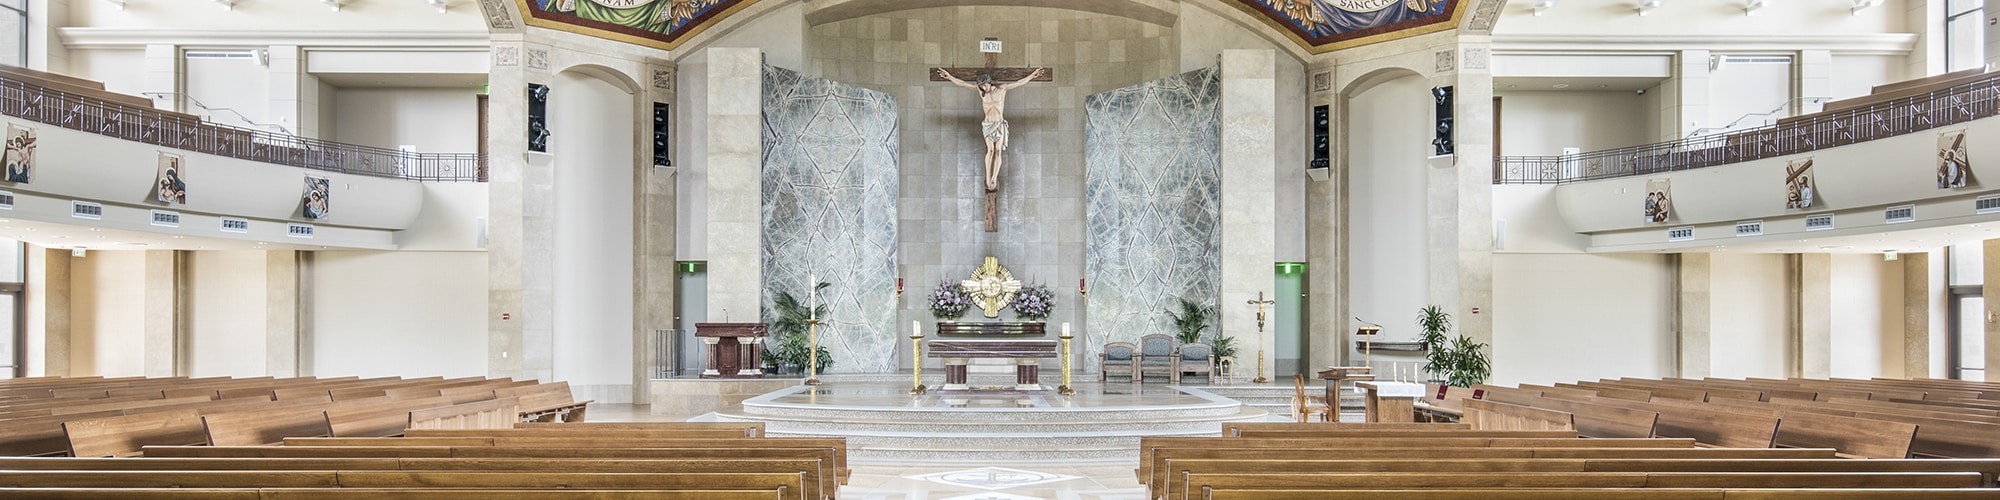 St. John Neumann Catholic Church | Sanctuary - AQUILA Project Management Case Study